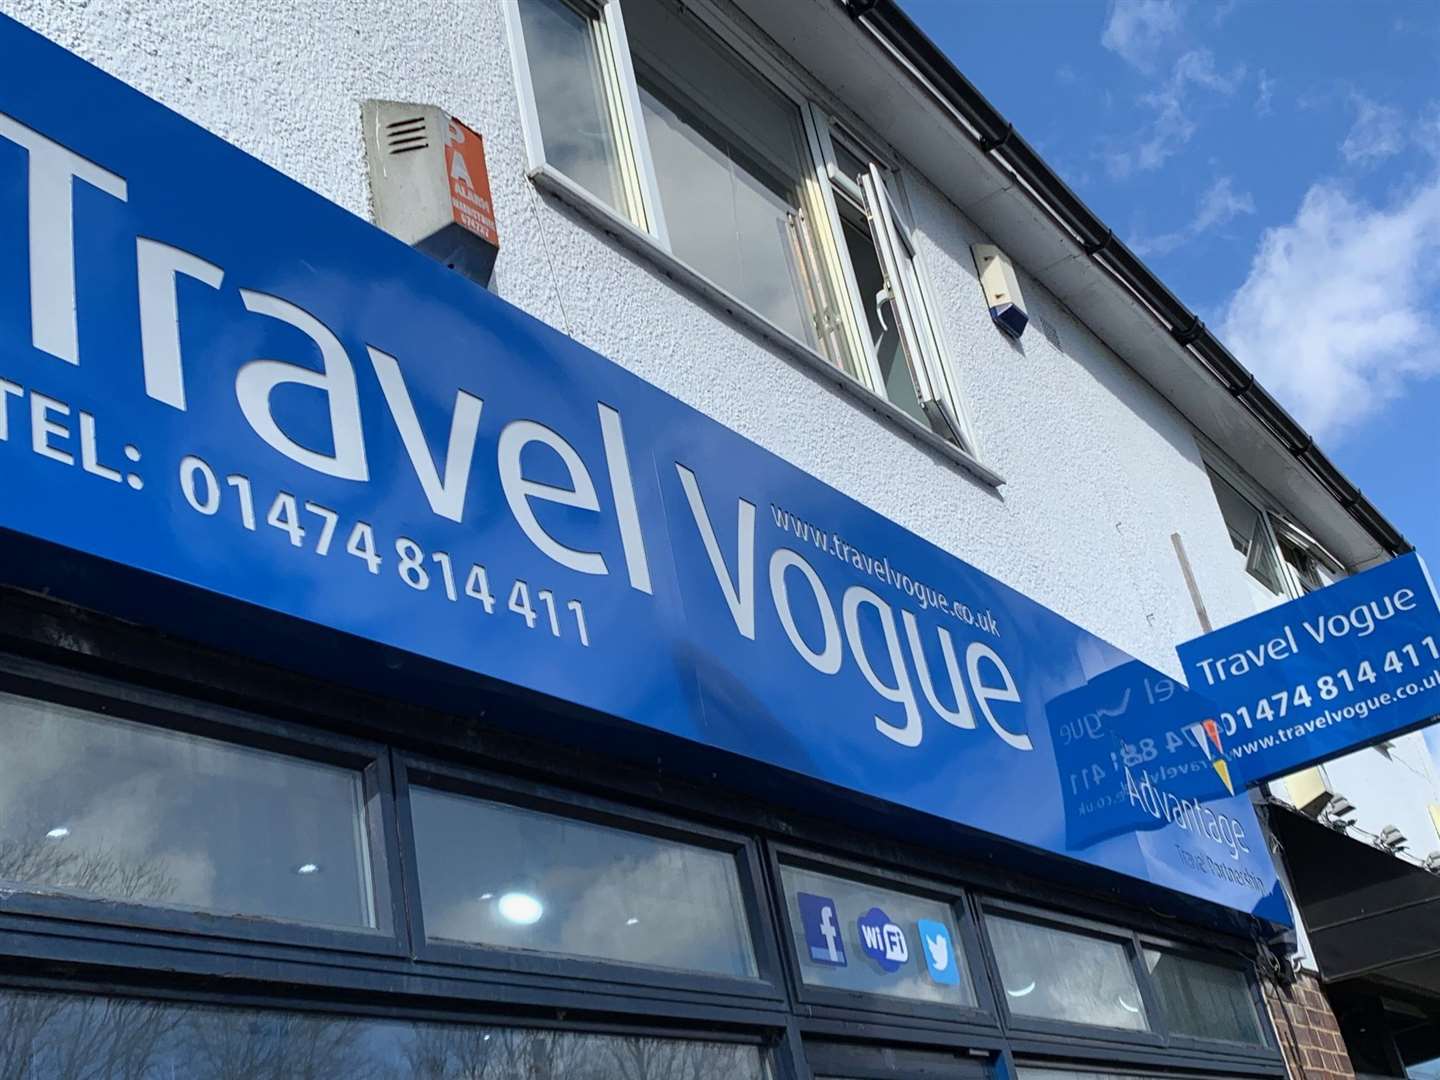 Travel Vogue Ltd in Meopham